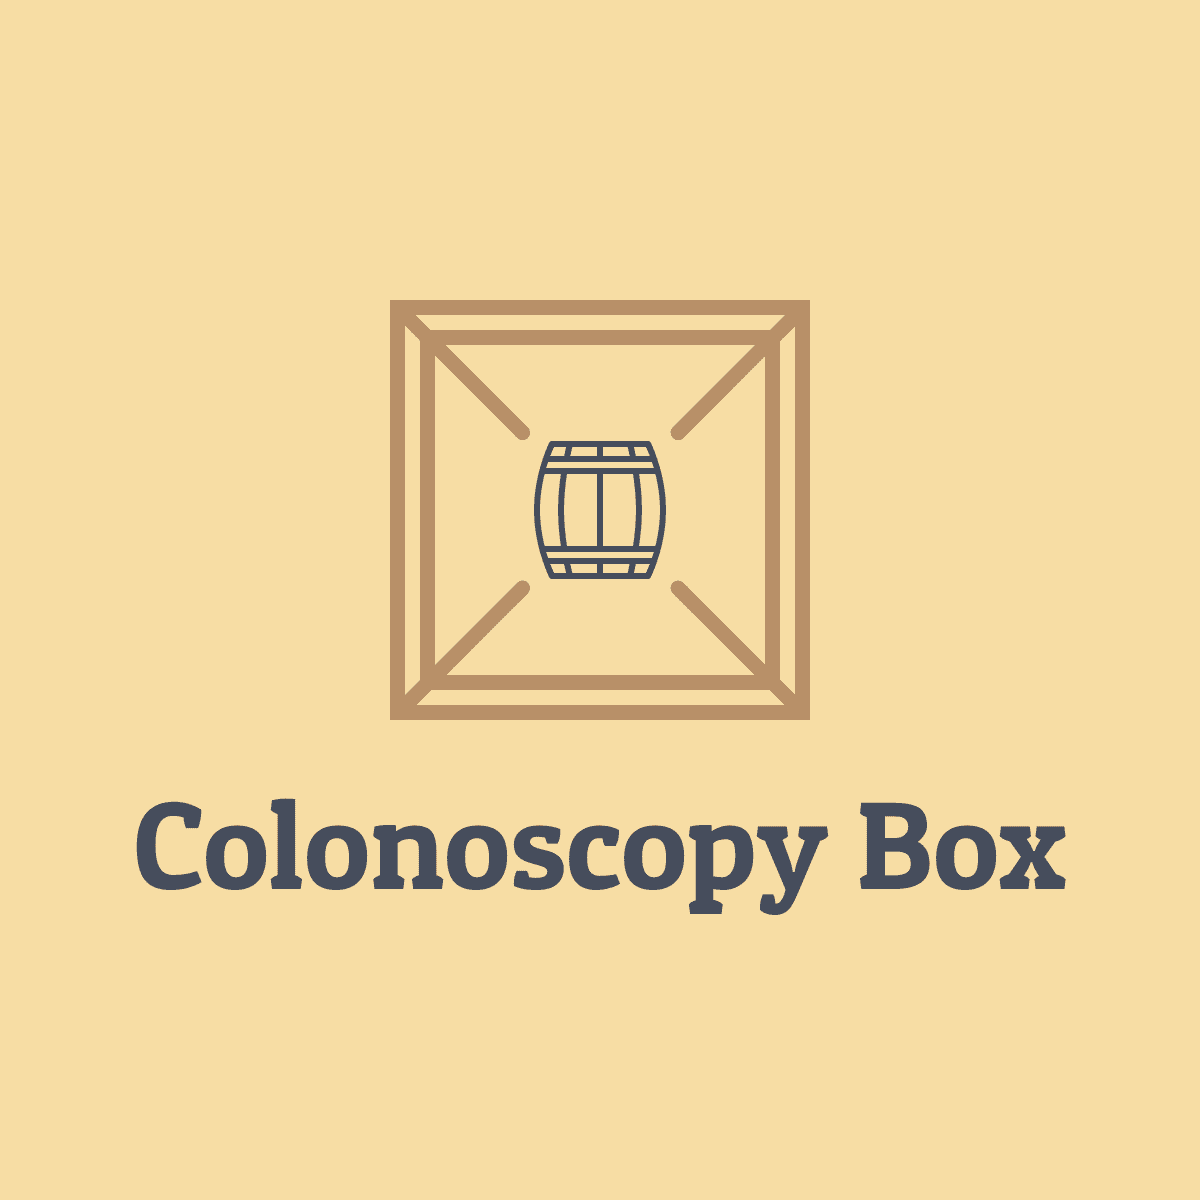 Colonoscopy Box